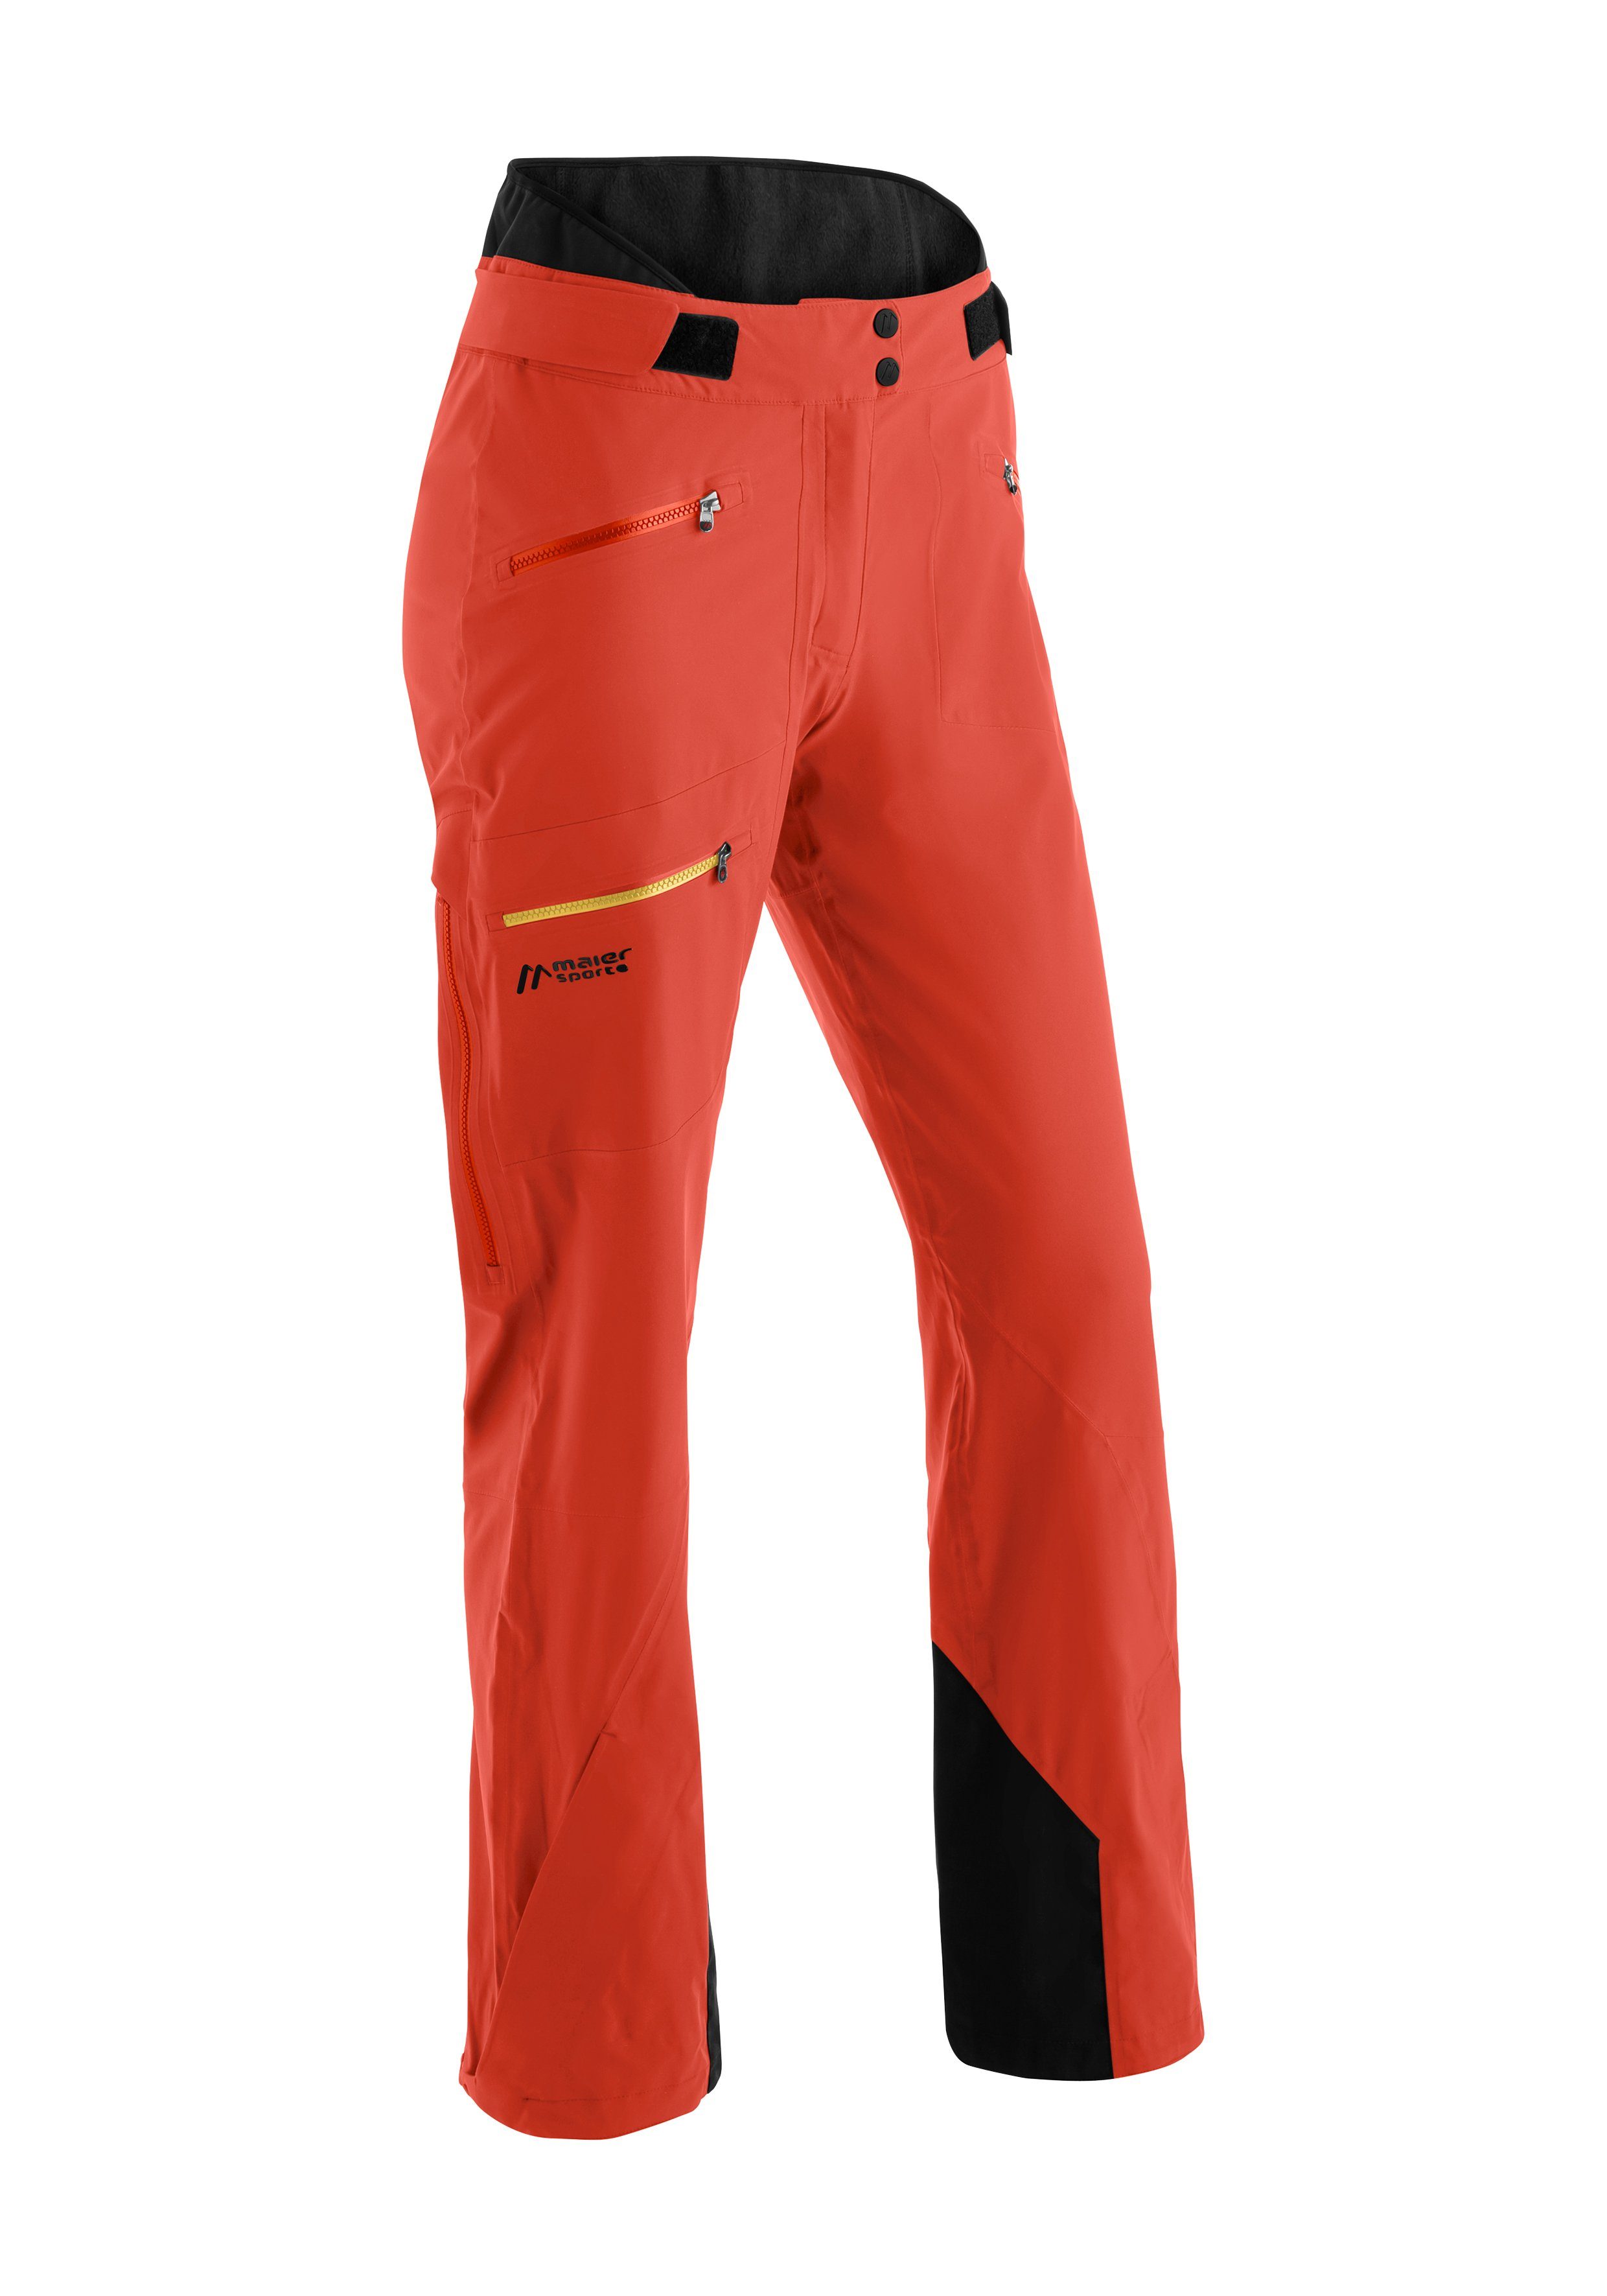 Maier Sports Funktionshose Liland P3 Pants W Robuste 3-Lagen-Hose für anspruchsvolle Outdoor-Aktivitäten knallrot